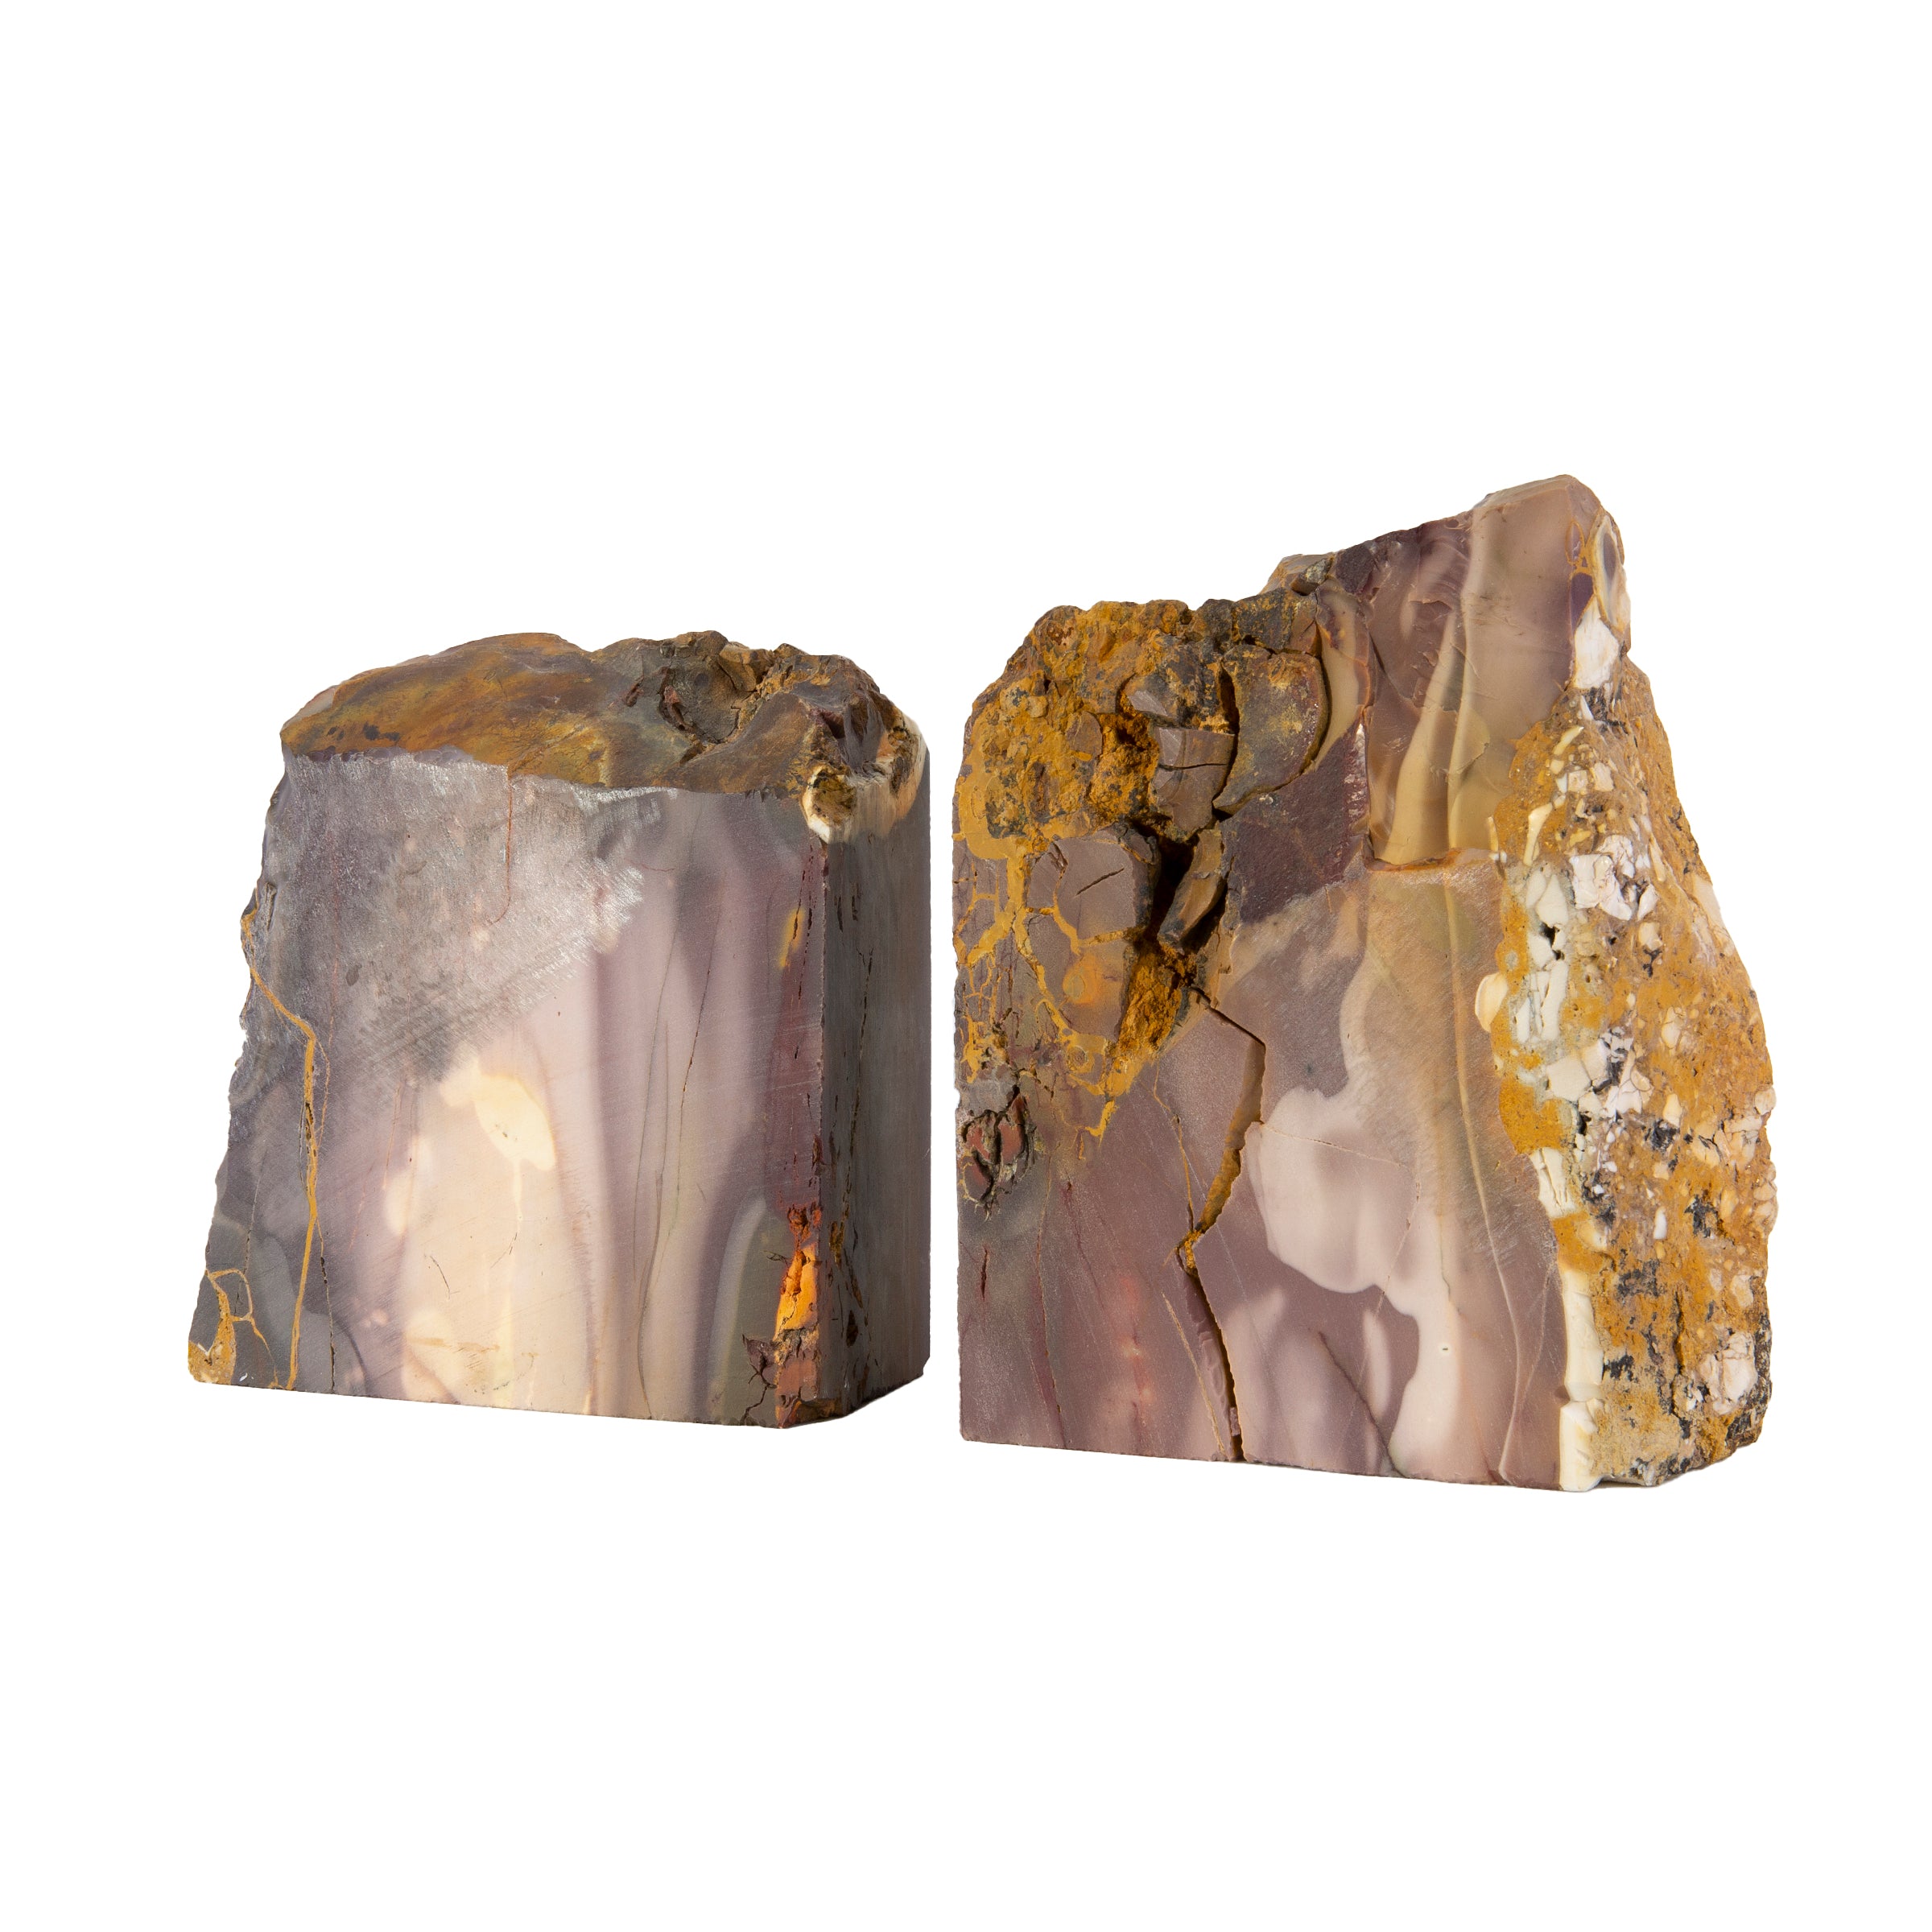 Mookaite 6.5 inch Polished Jasper Bookends - Australia - GGR-007 - Crystalarium